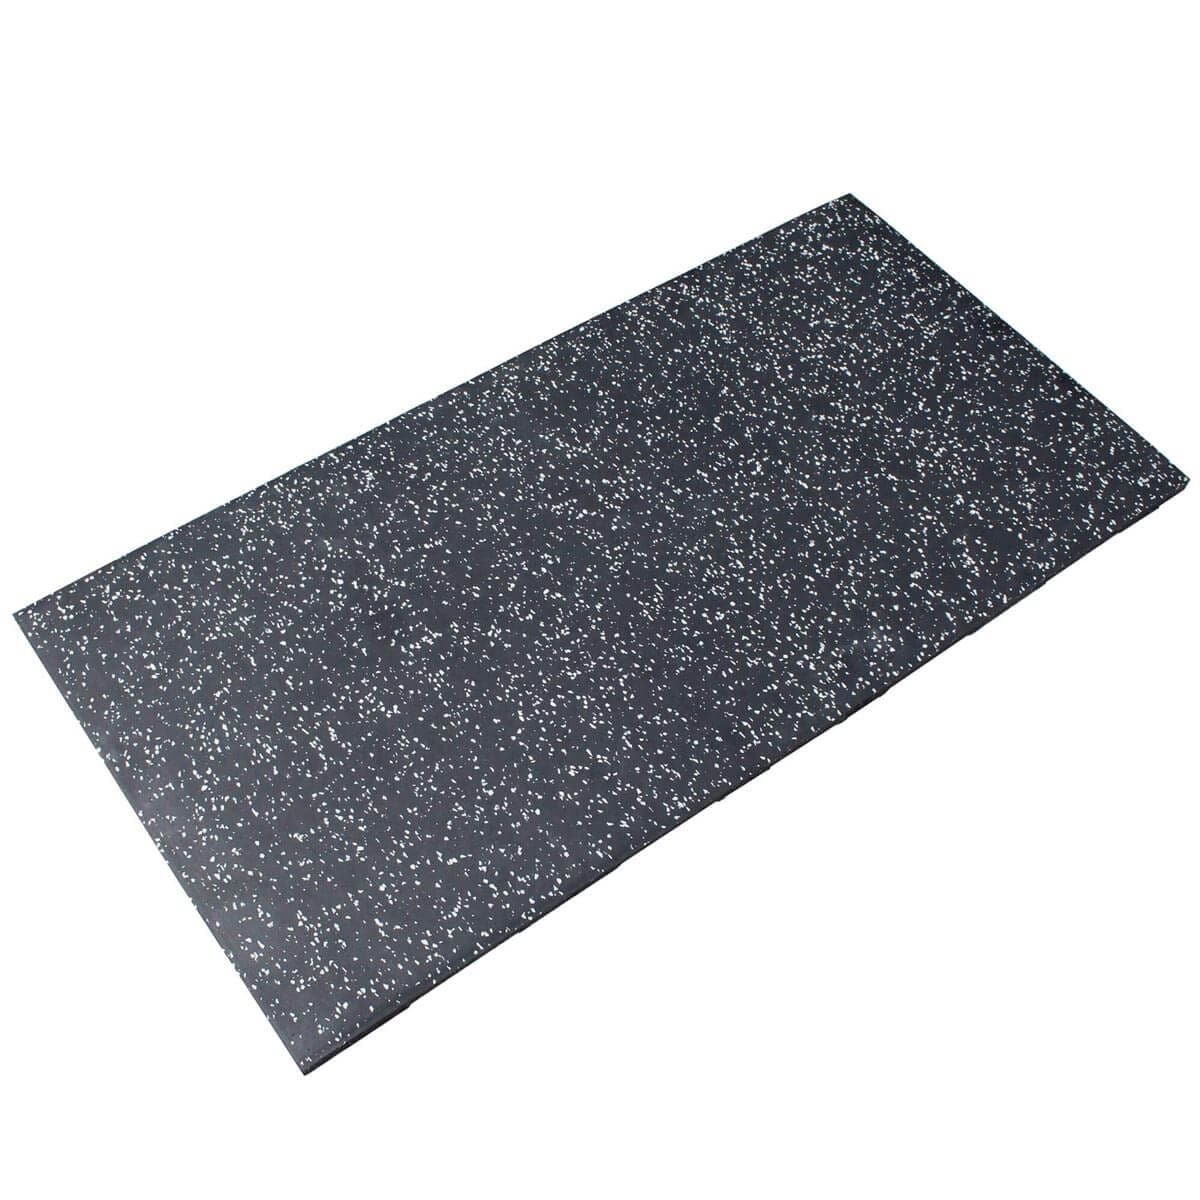 PRIMAL STRENGTH 40mm EPDM Premium Rubber Gym Flooring Tile - Grey